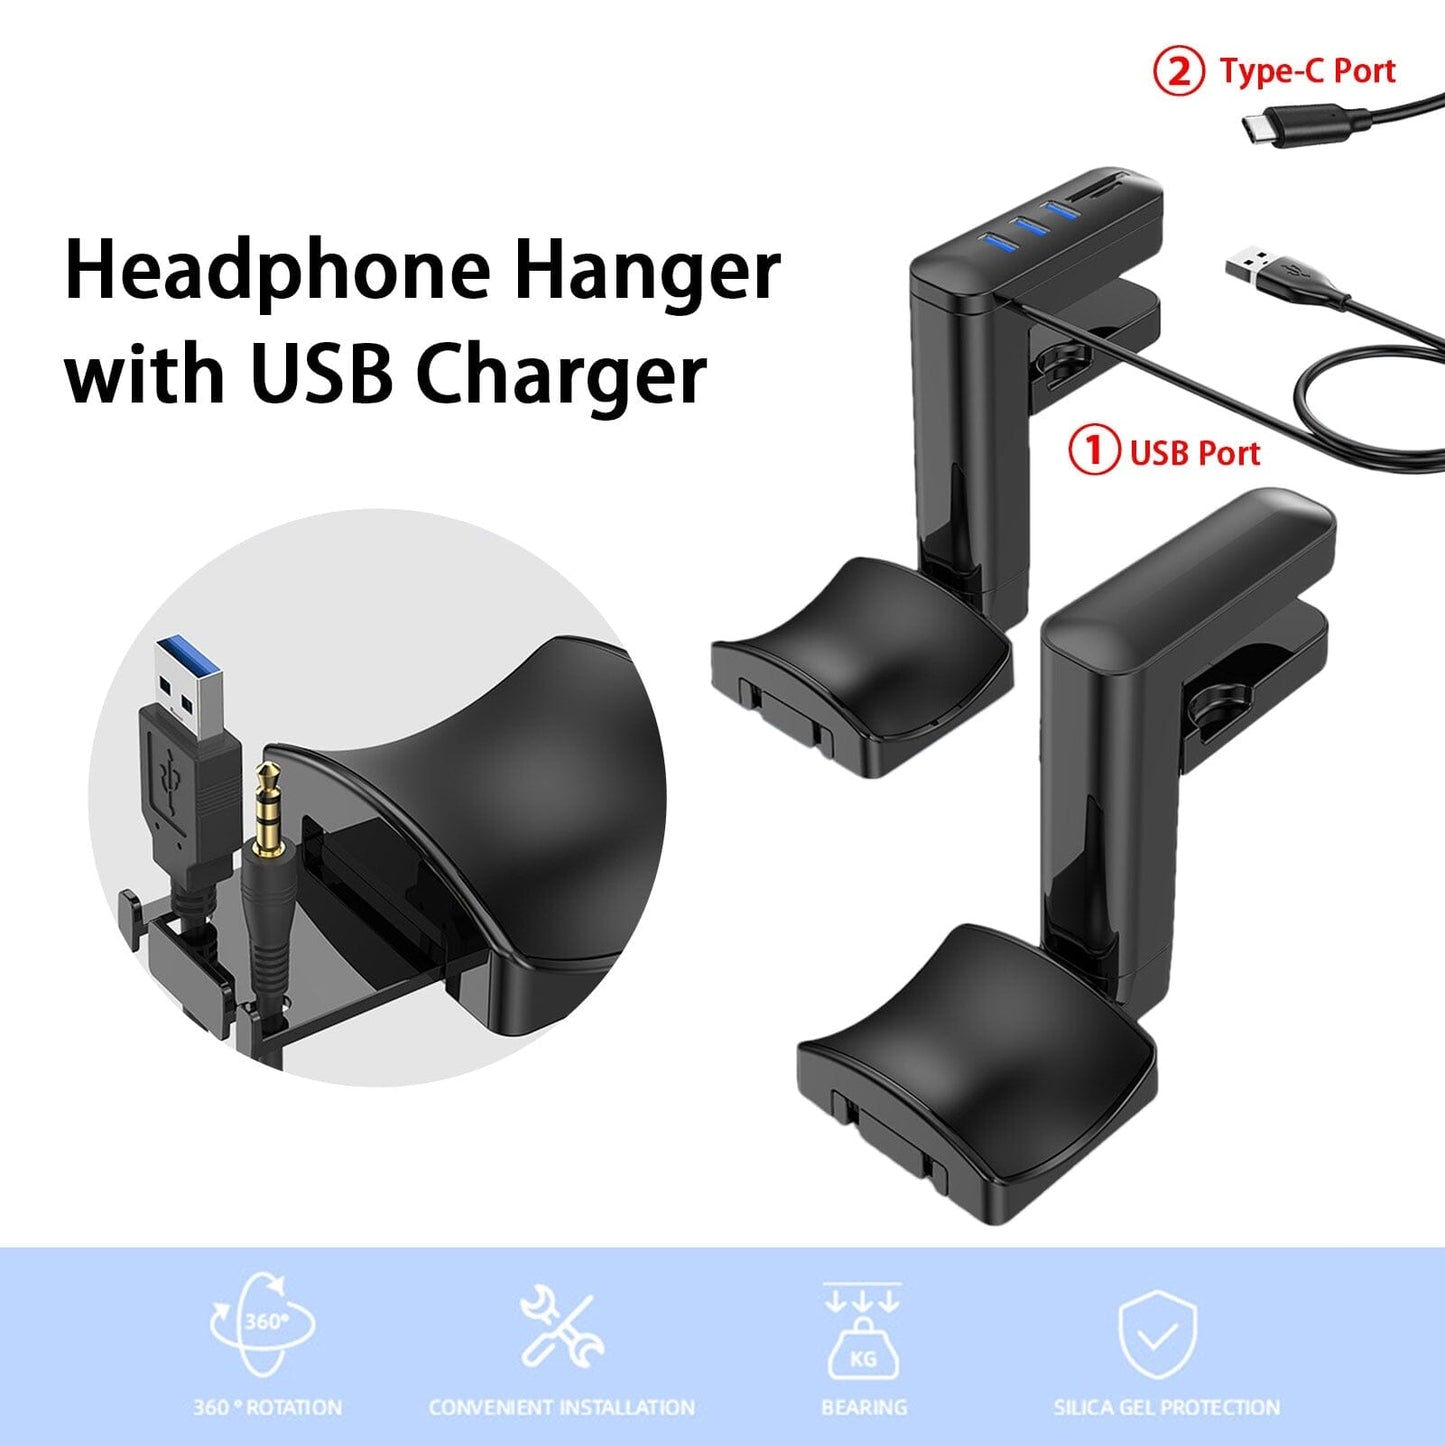 Cogu Headphone Holder + USB Hub